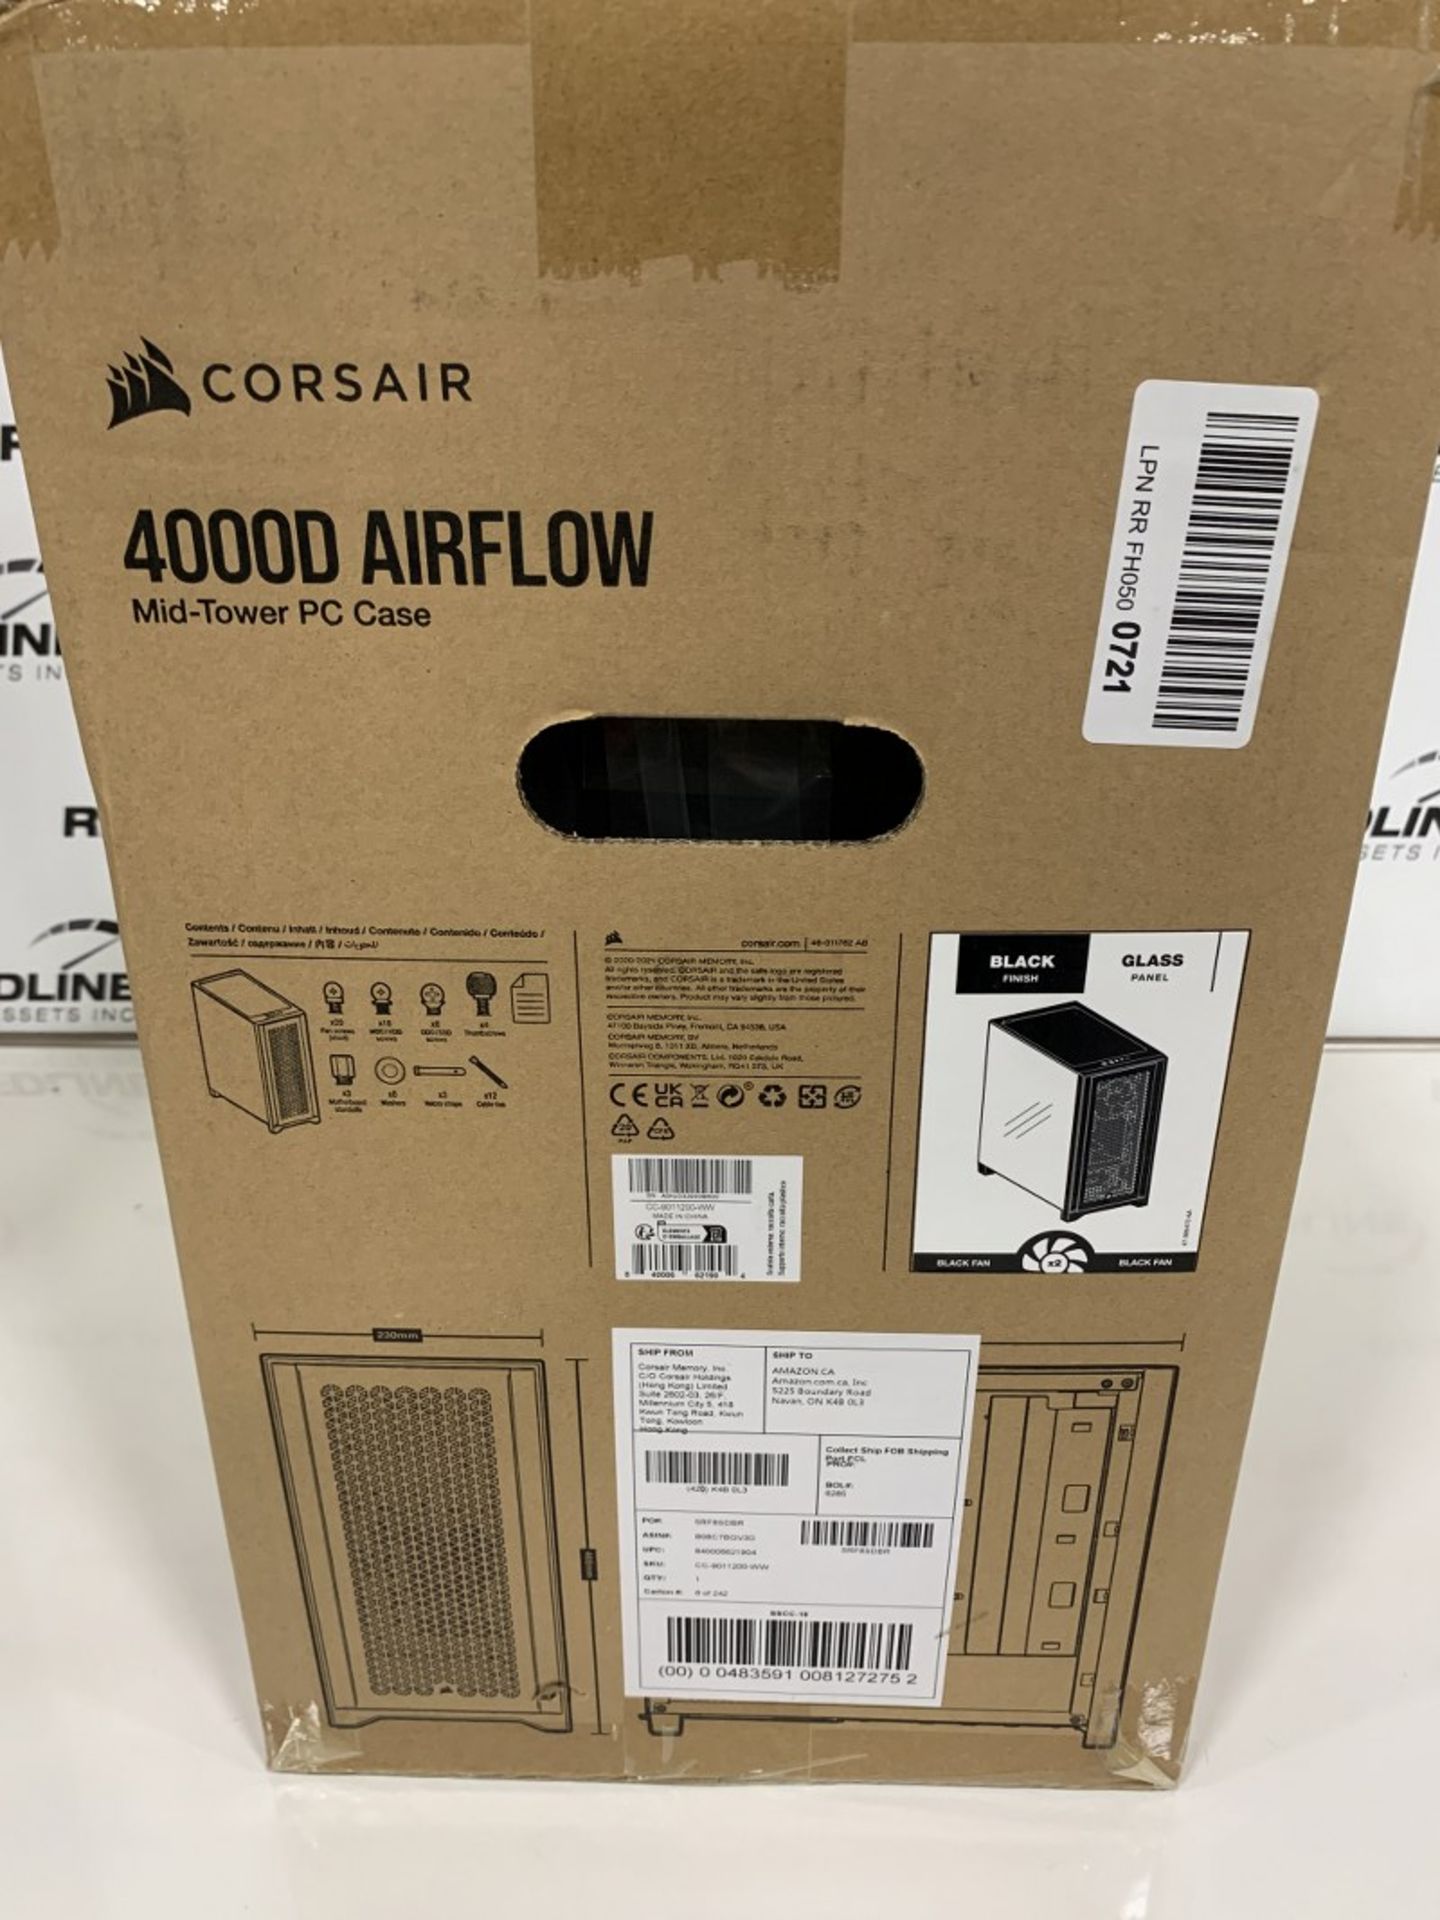 CORSAIR - 4000D AIRFLOW MID-TOWER PC CASE - Image 3 of 3